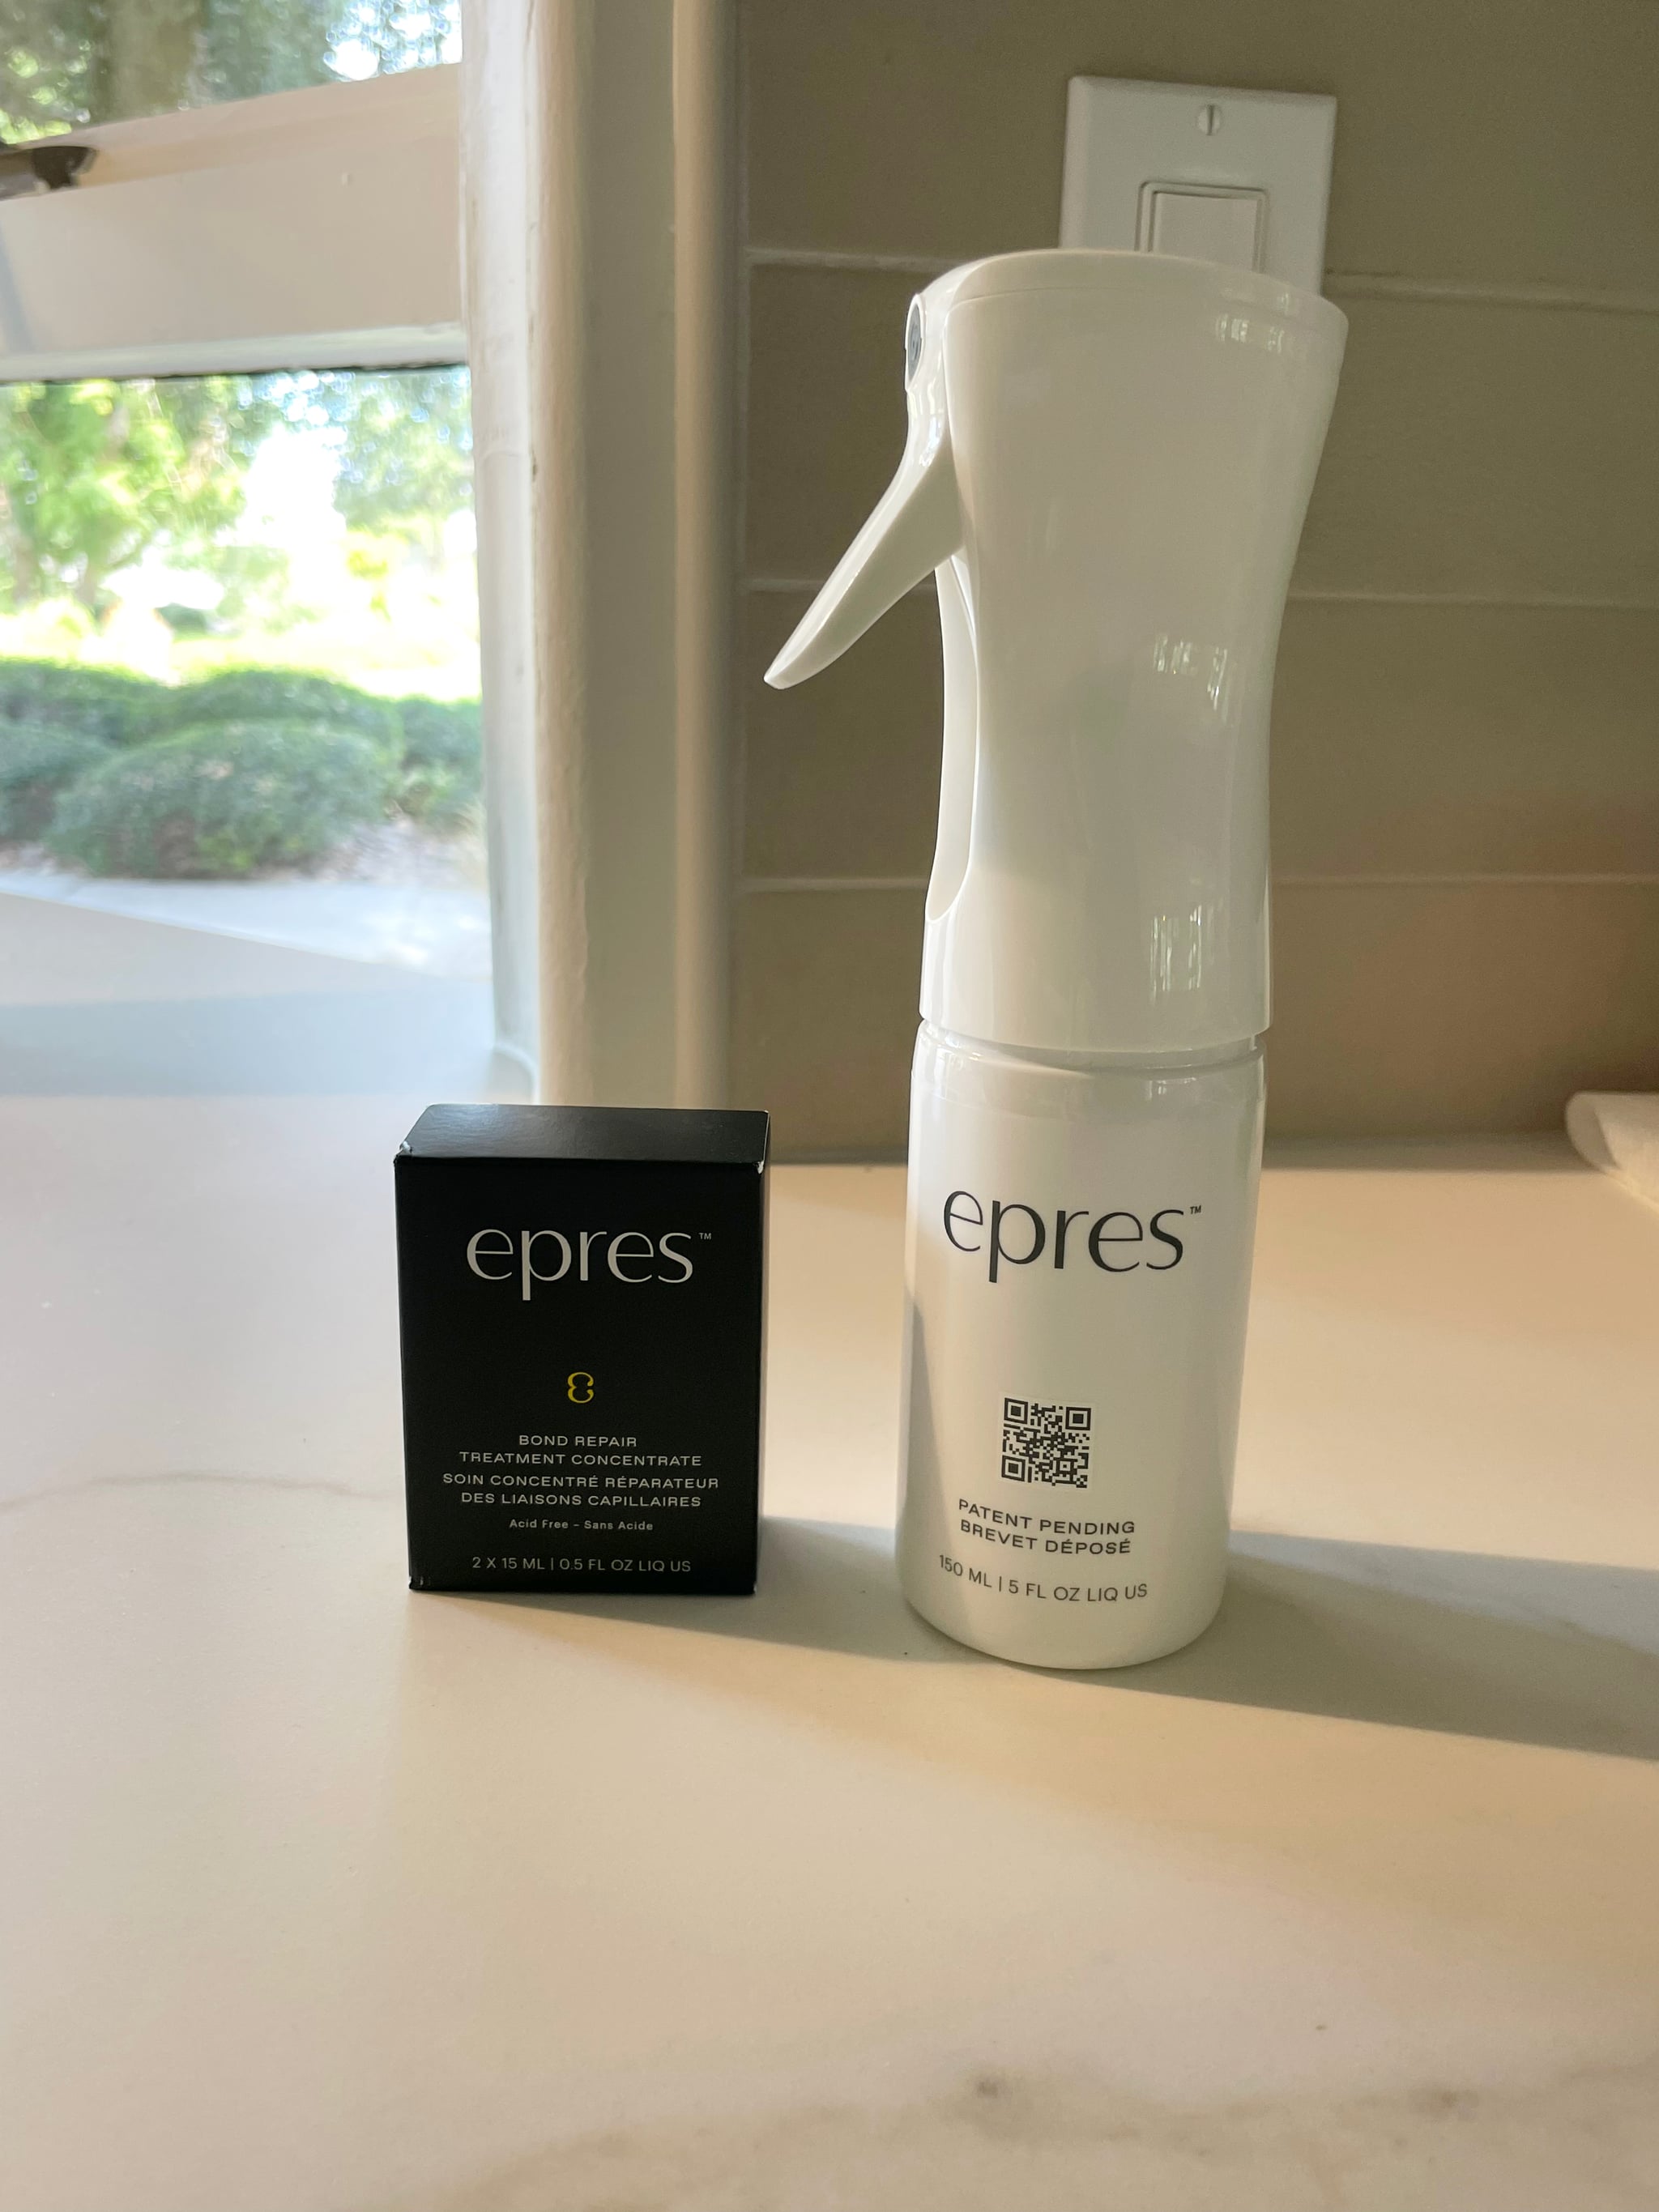 Epres Hair Review